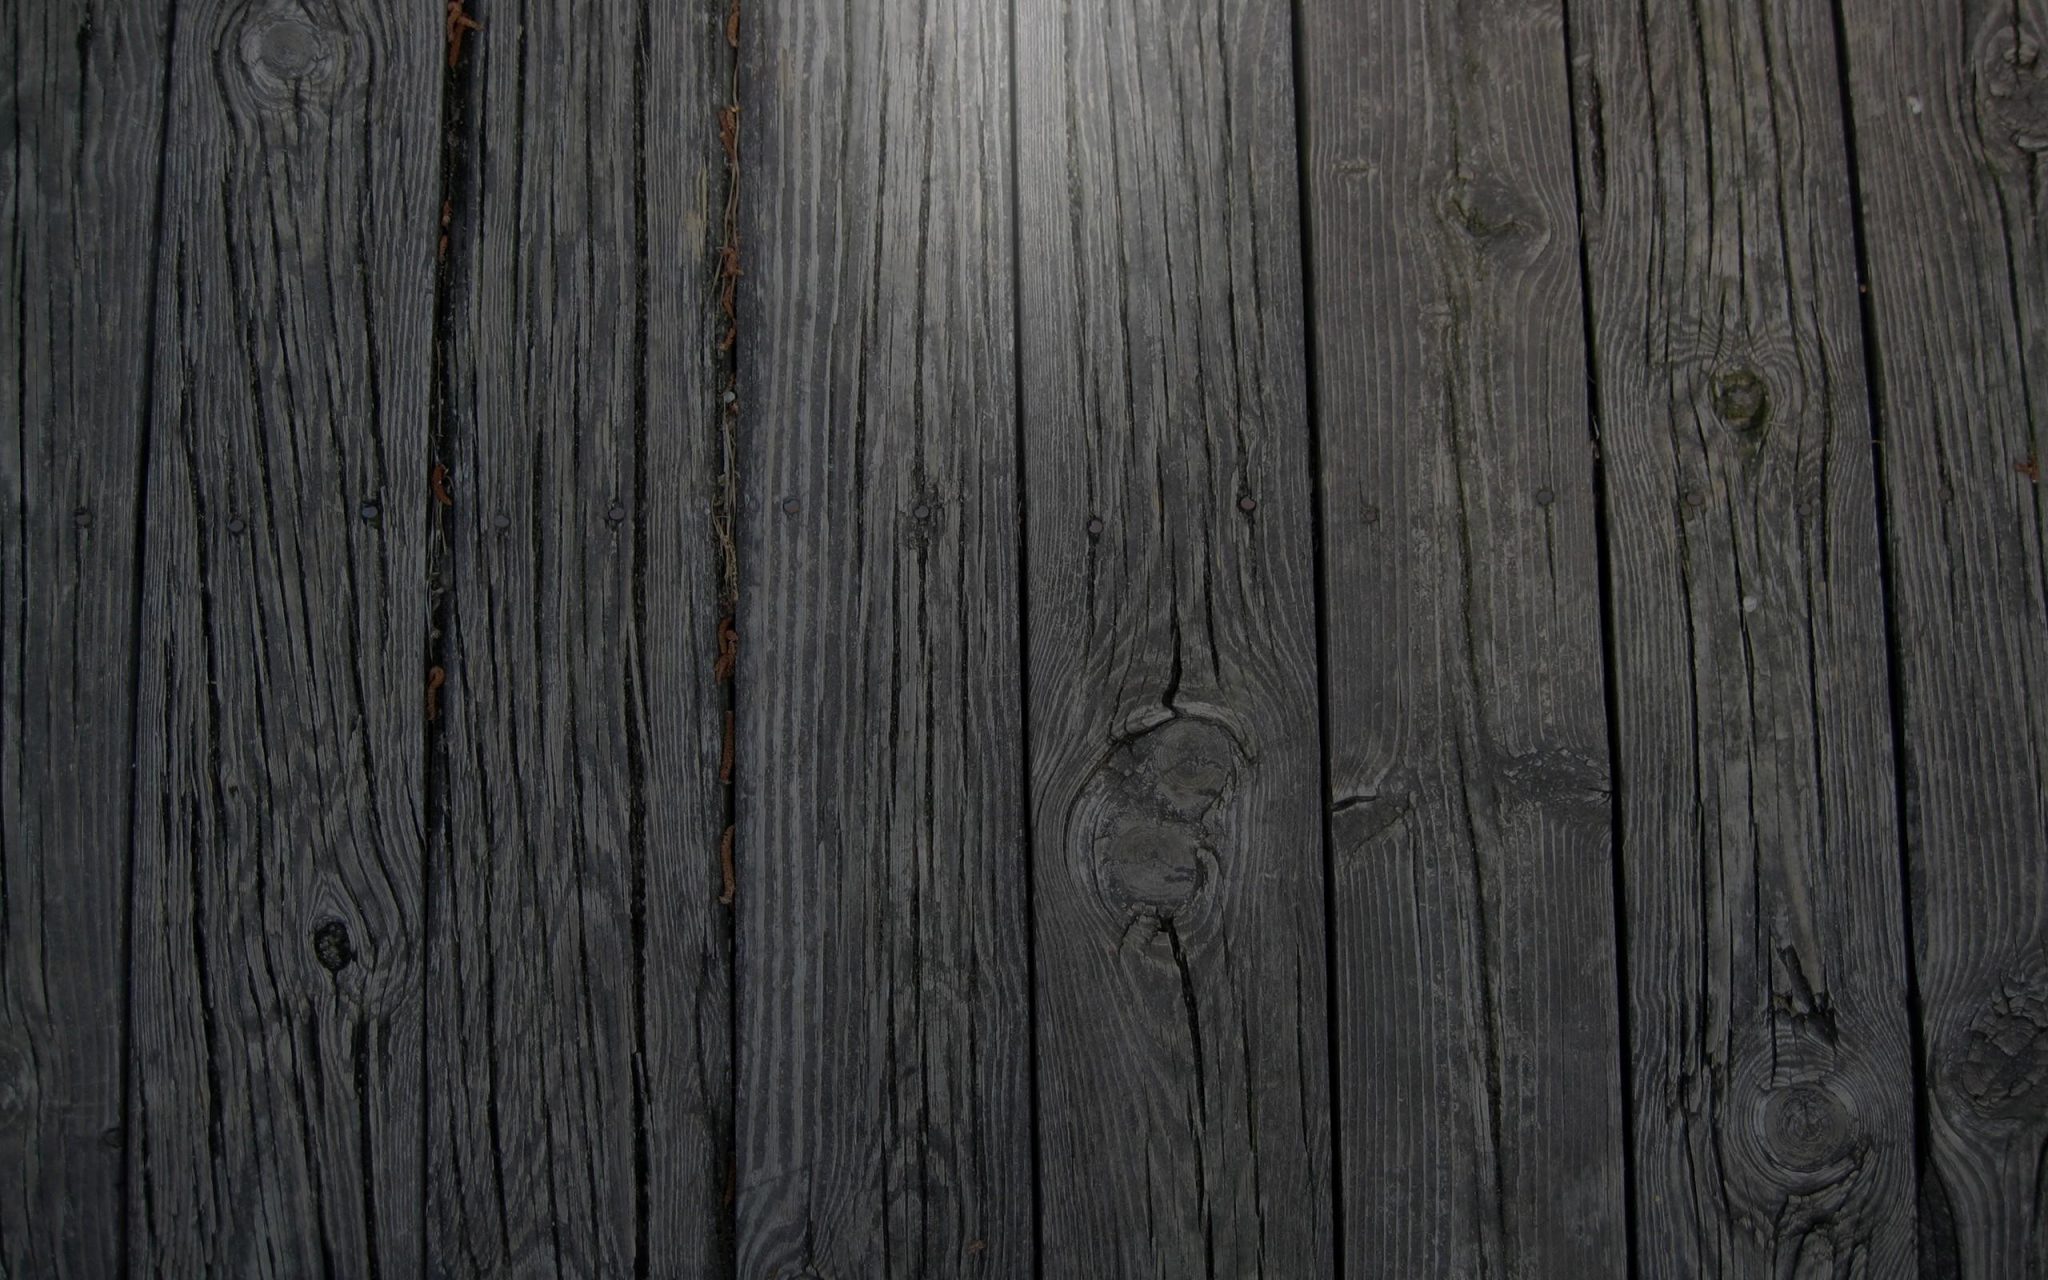 Best Pattern Of Background Image For Websites Dark Wood